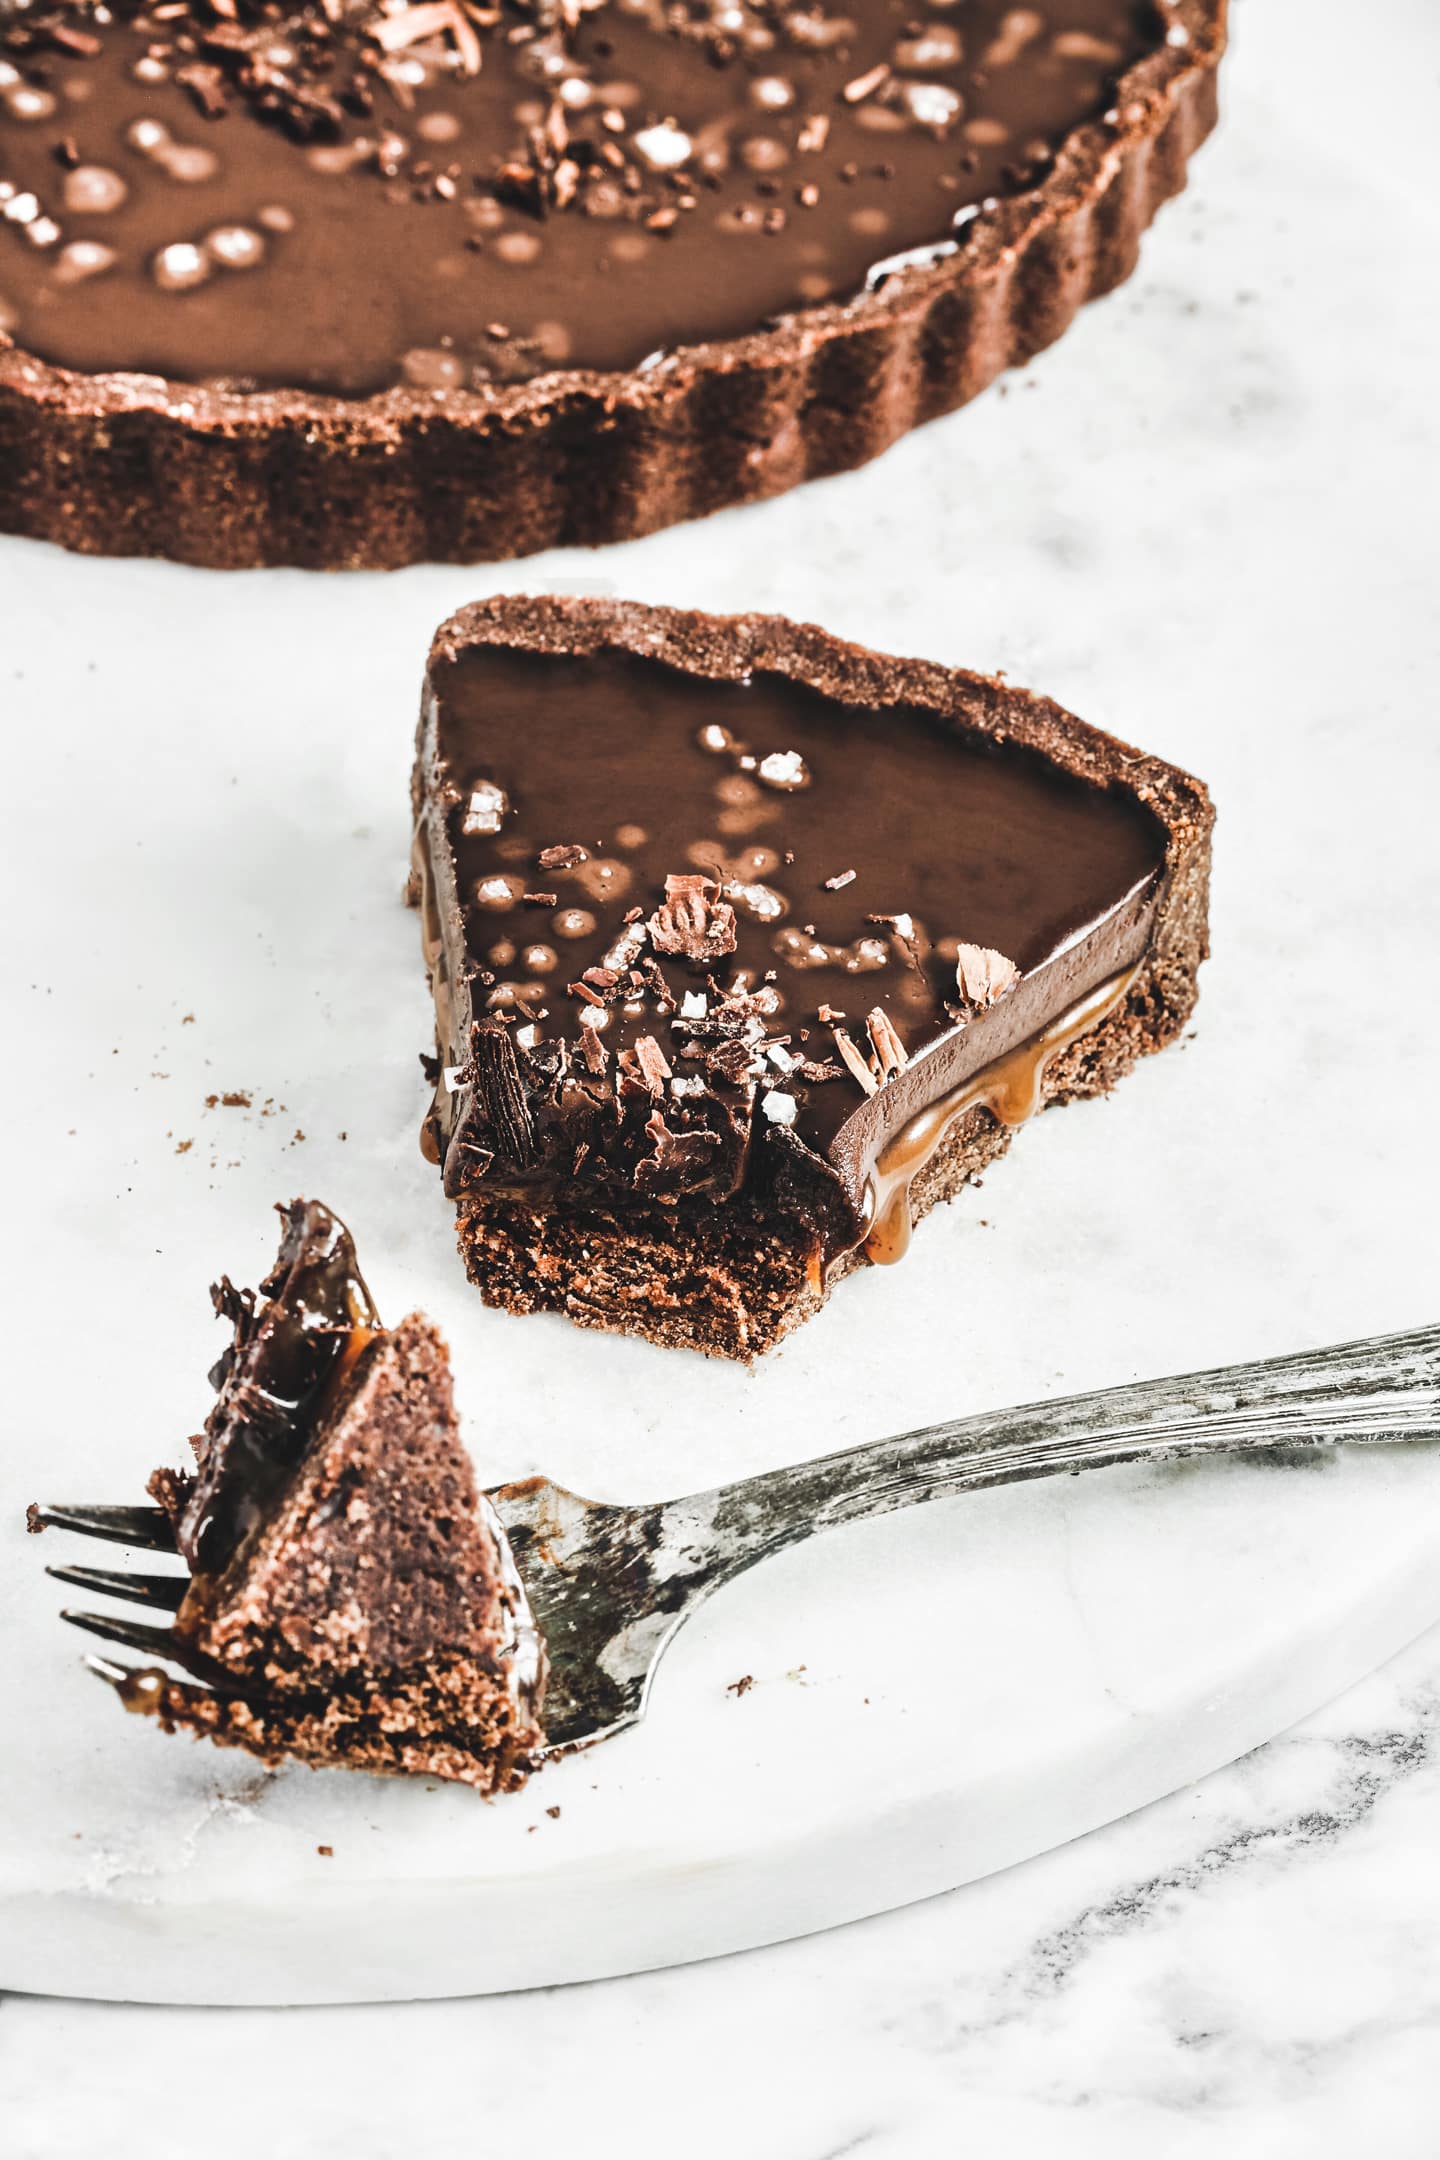 How to make the best chocolate tart recipe